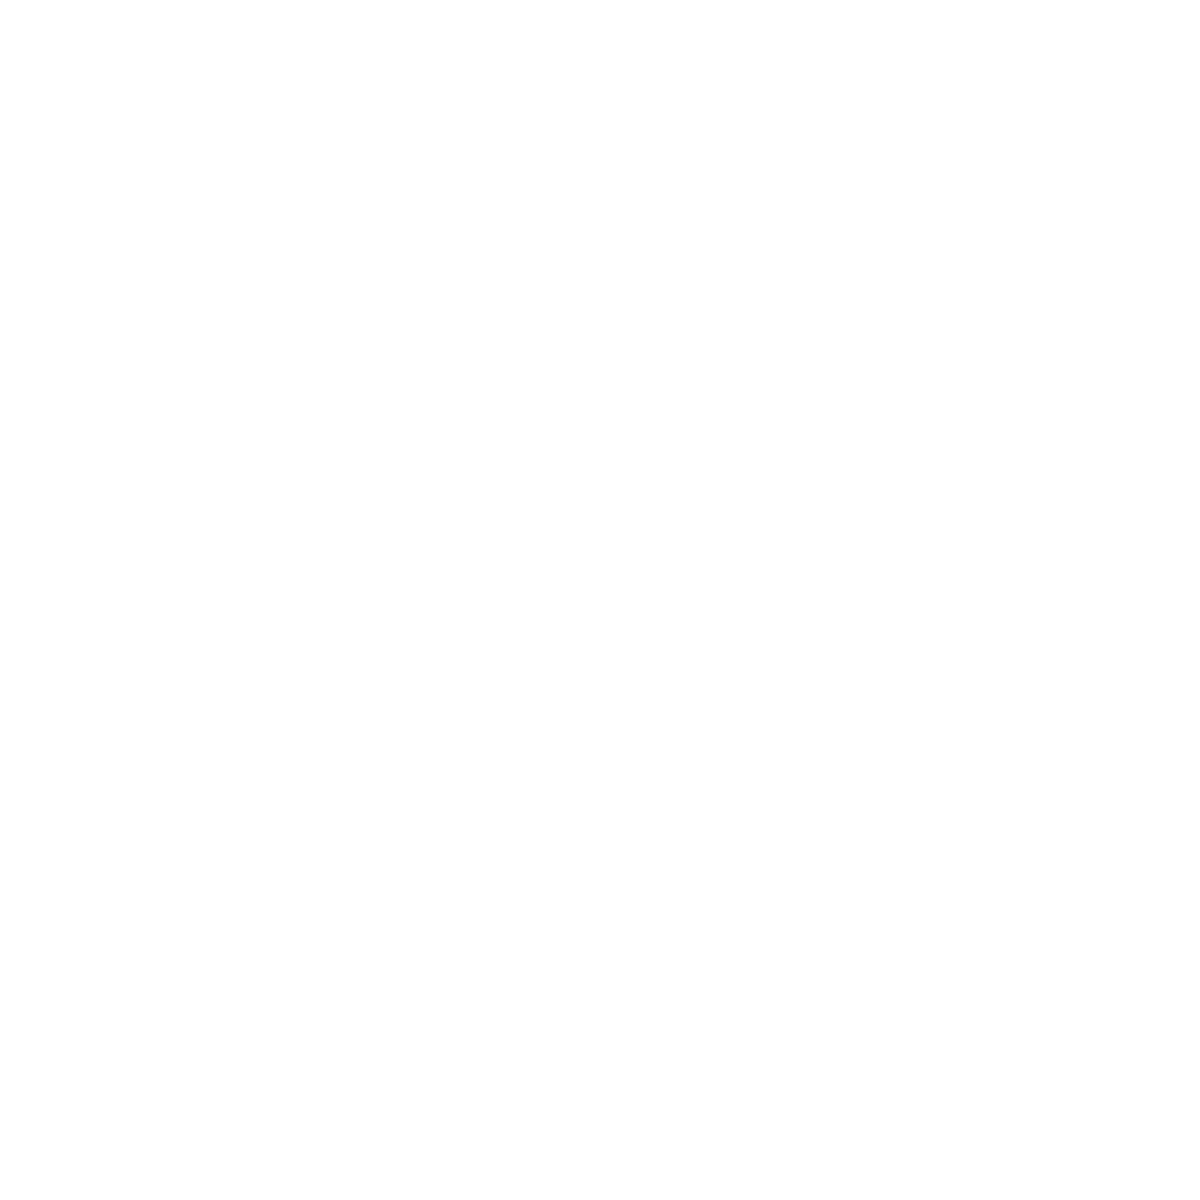 Missouri State Auditor’s Office